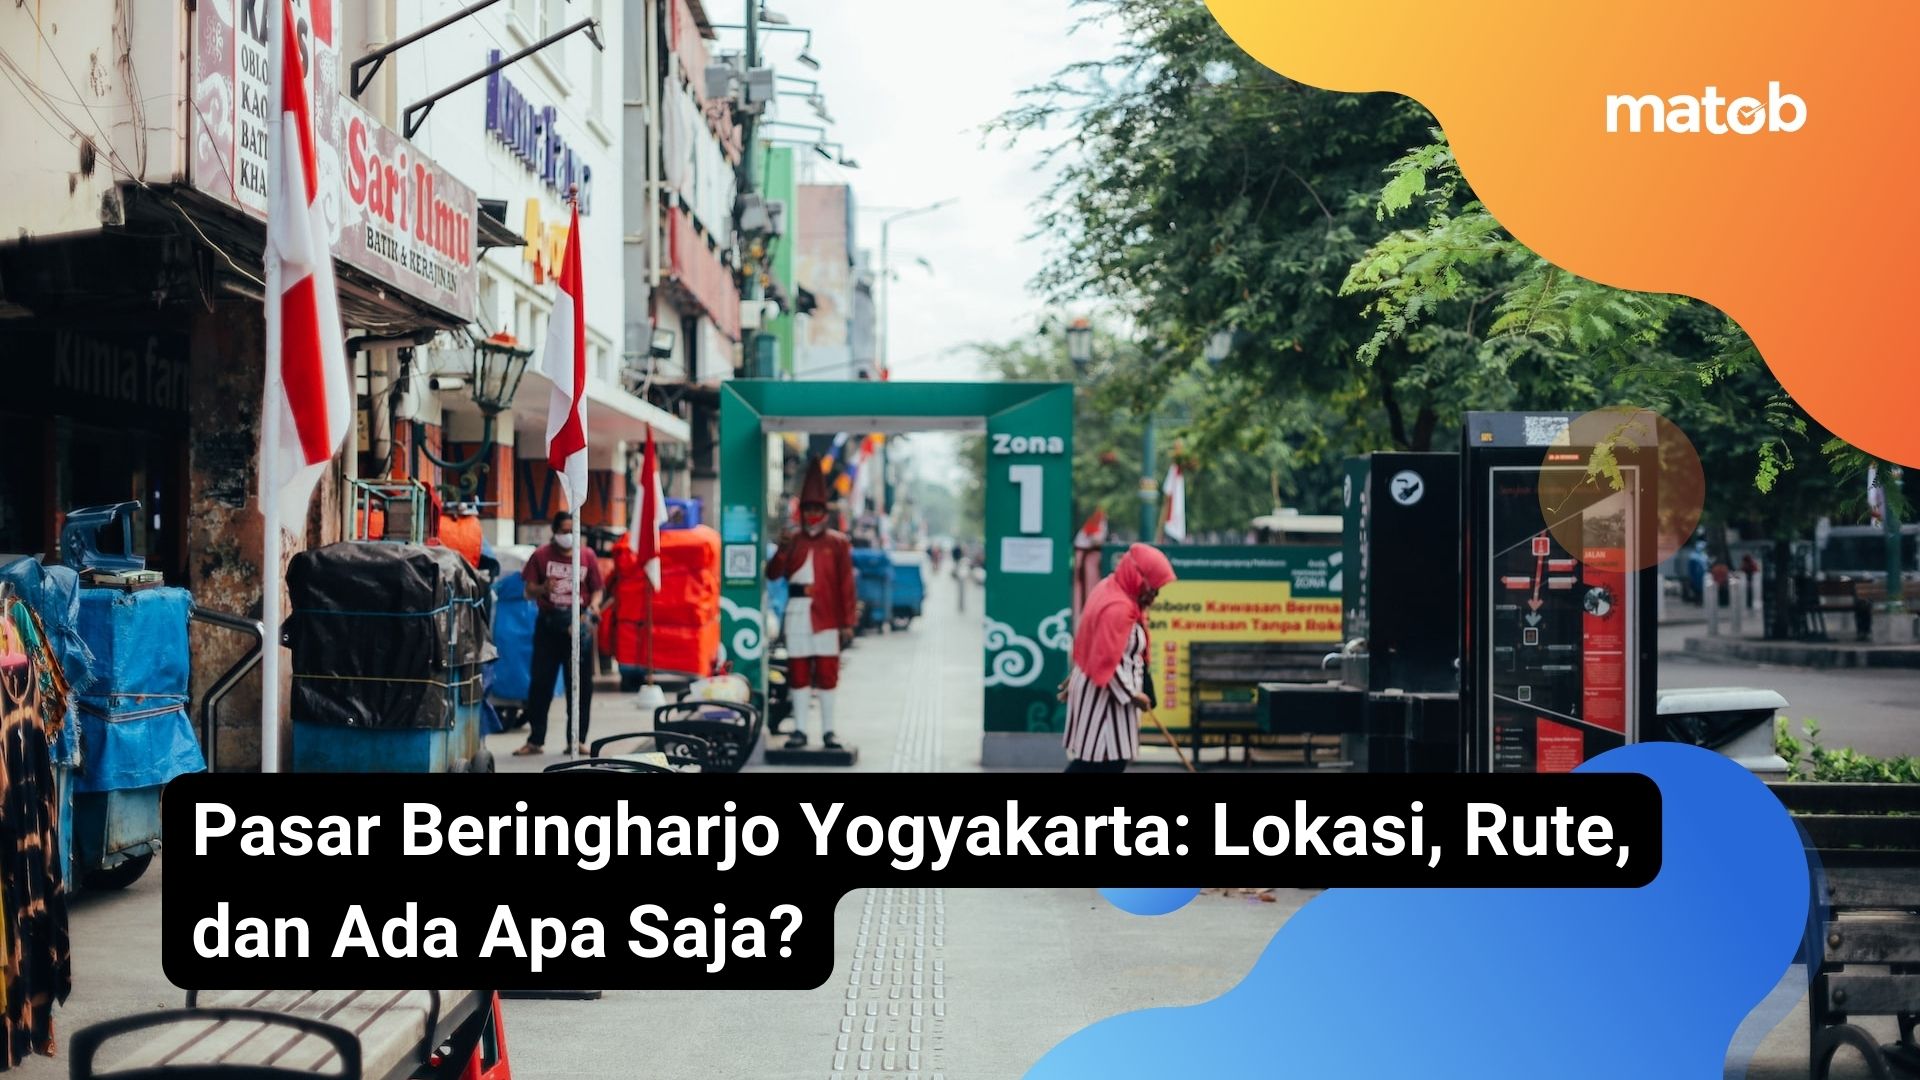 Pasar Beringharjo Yogyakarta: Lokasi, Rute, dan Ada Apa Saja?